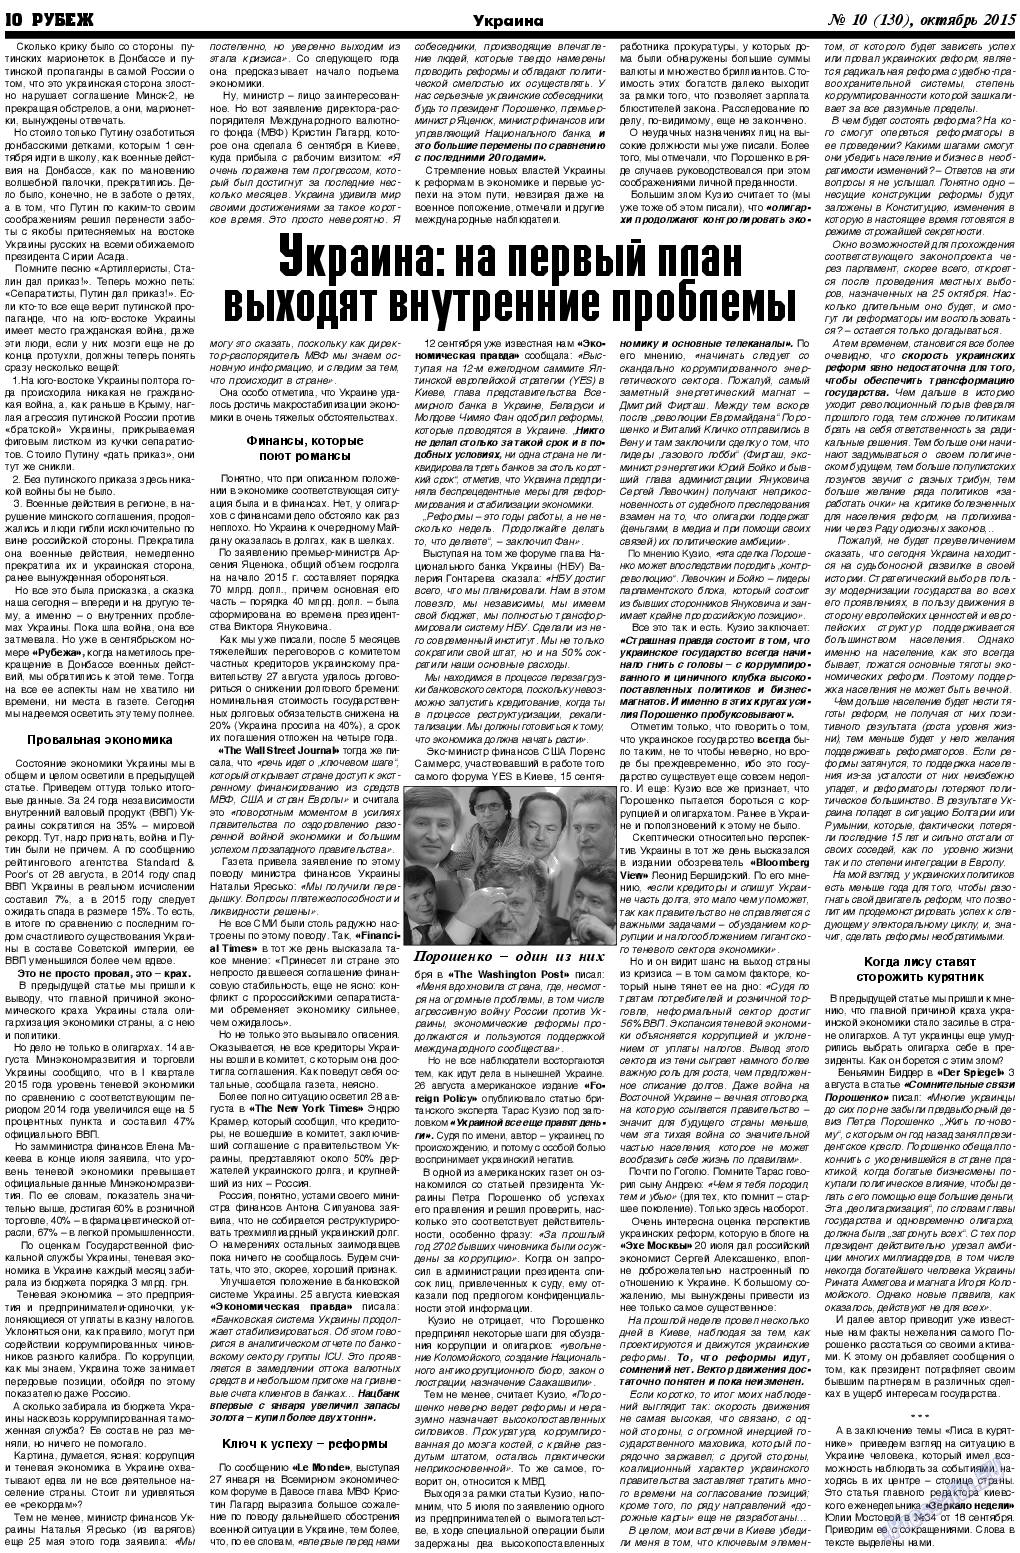 Рубеж, газета. 2015 №10 стр.10